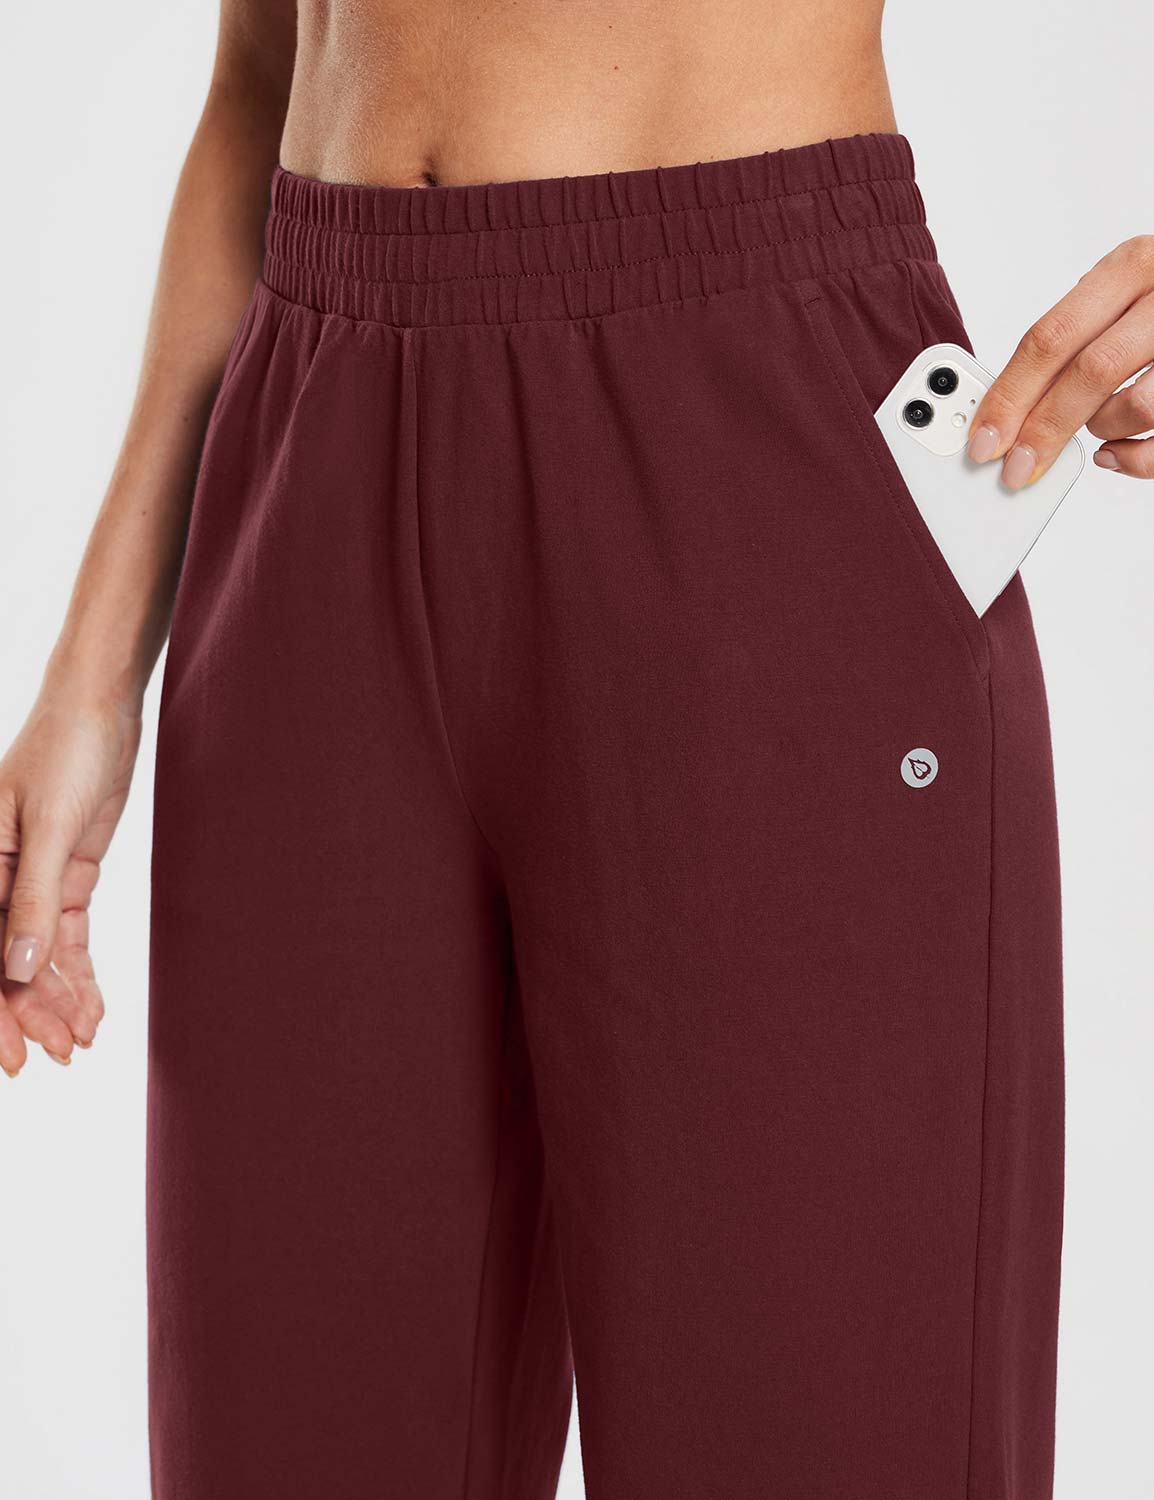 Baleaf Women's Loose Cotton Drawstring Straight Sweatpants Chocolate Truffle with Pockets